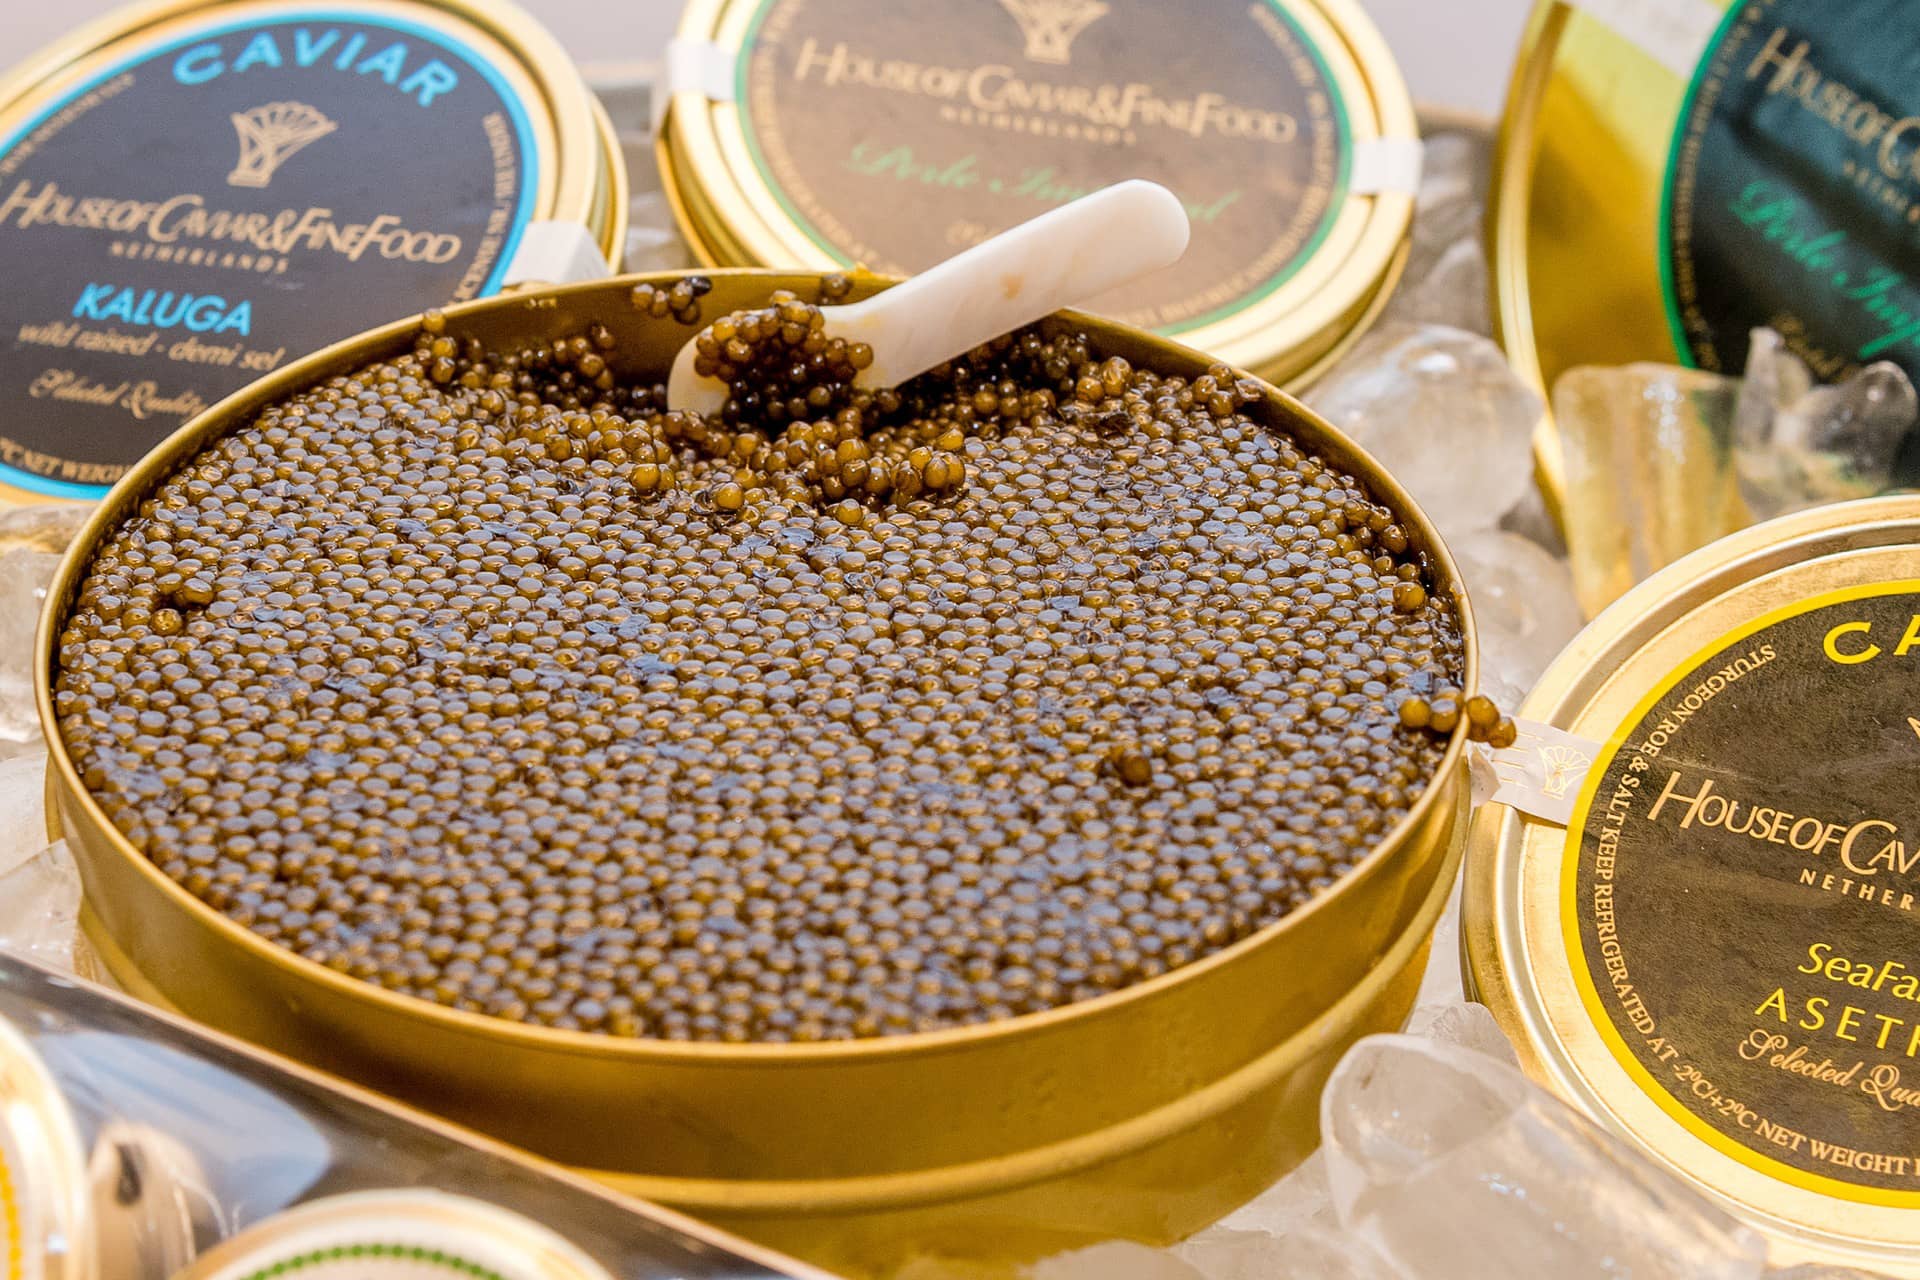 A can with high quality black caviar, sturgeon roe